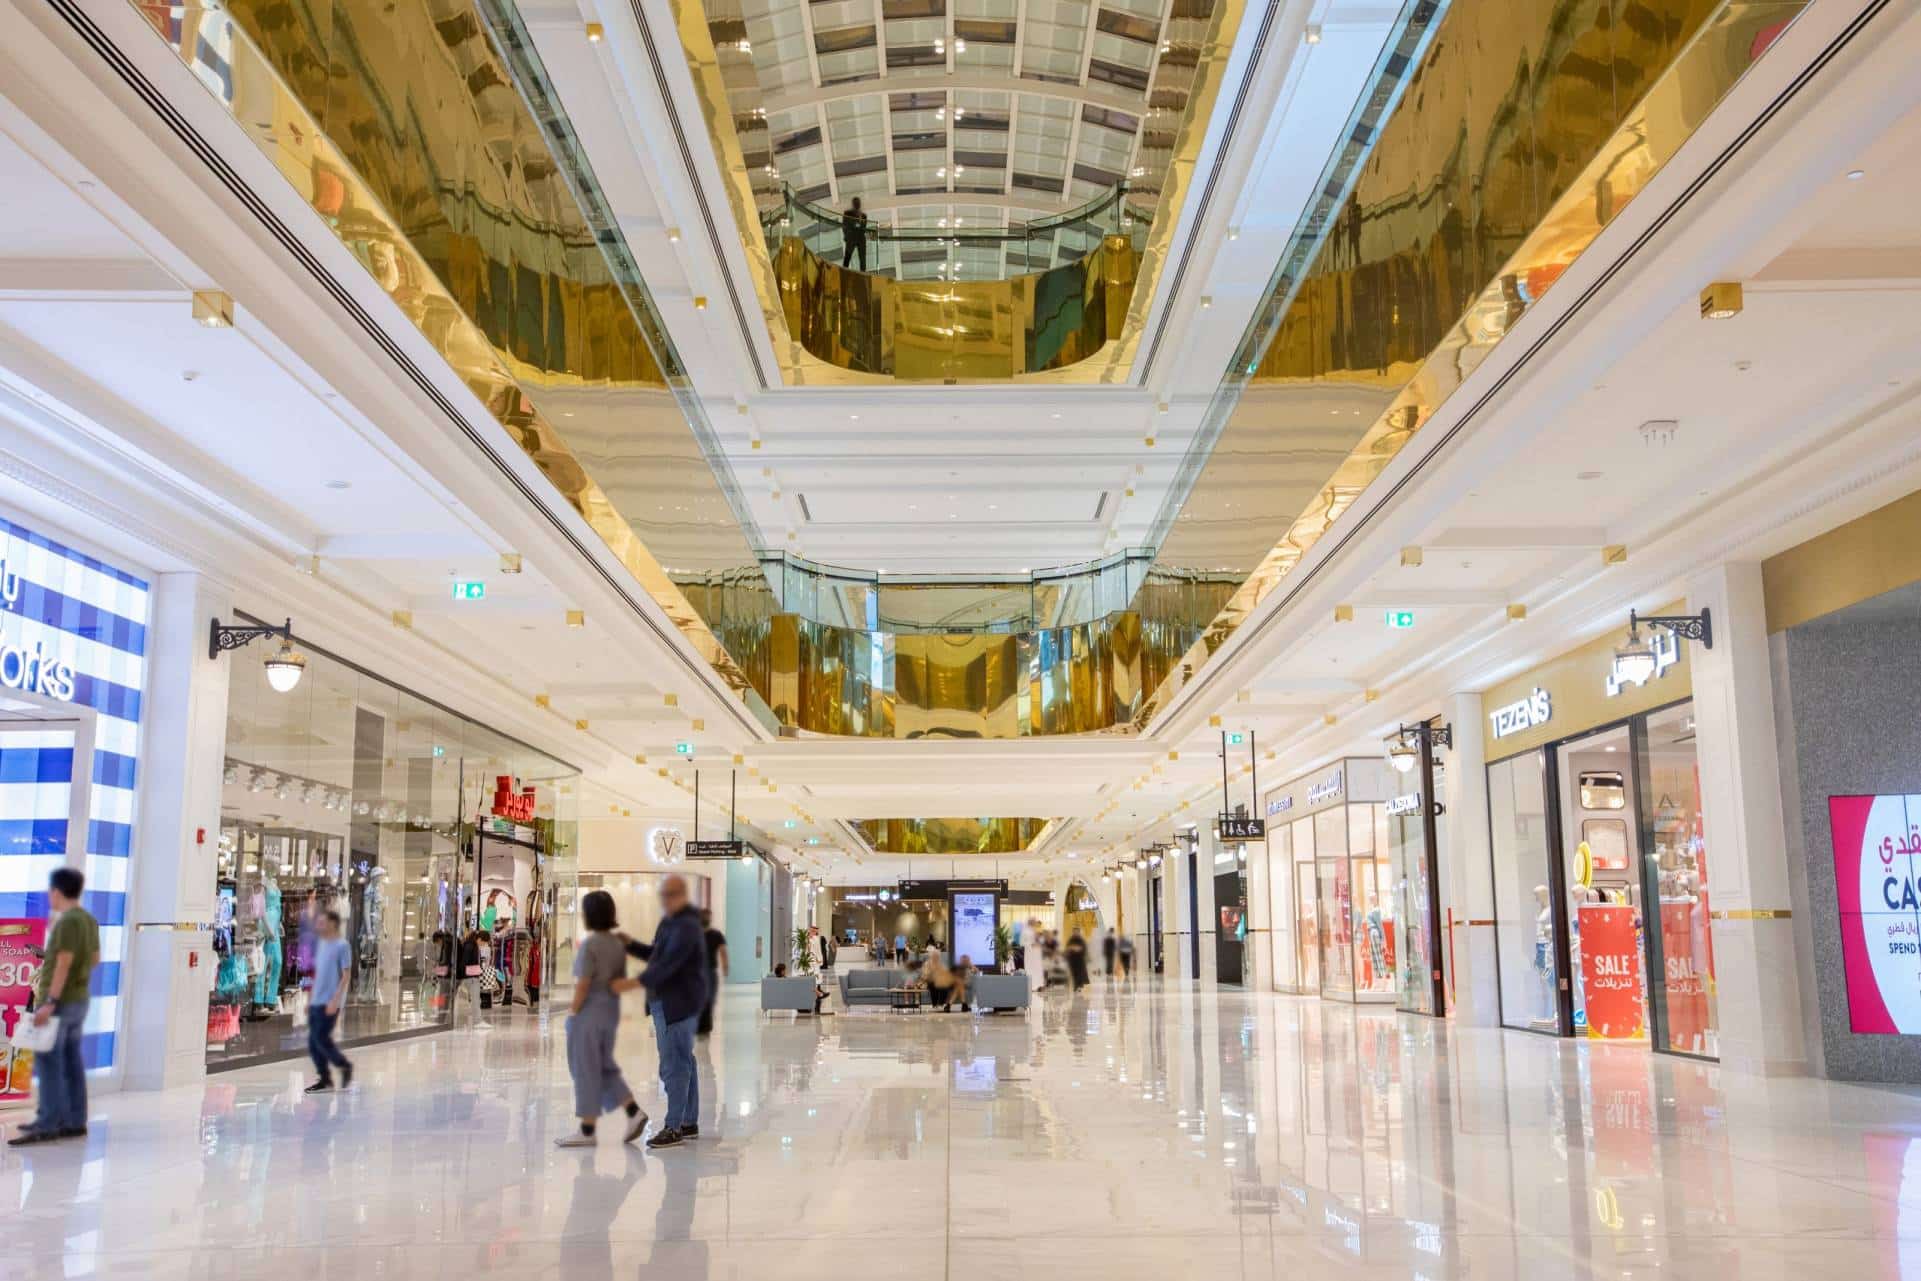 Steps for CCTV MOI Approvals for Retail Shops